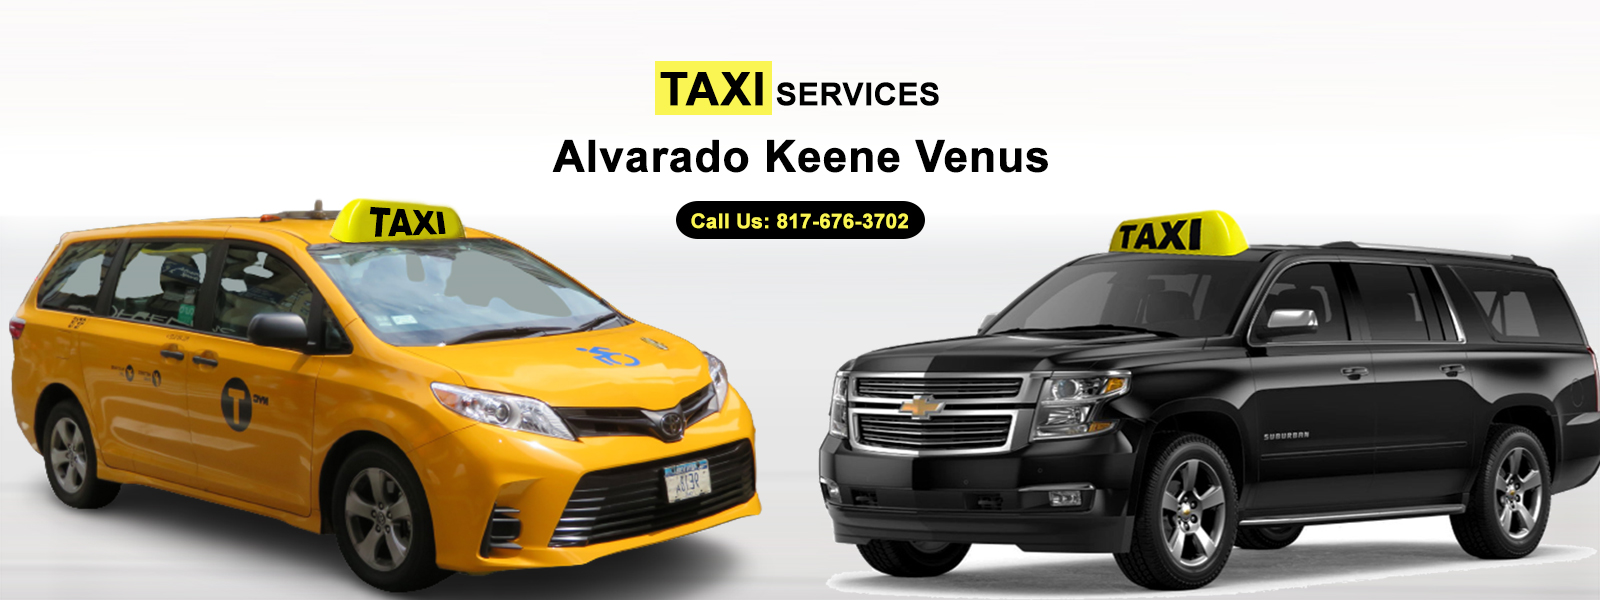 Alvarado-Keene-Venus-Banner-New